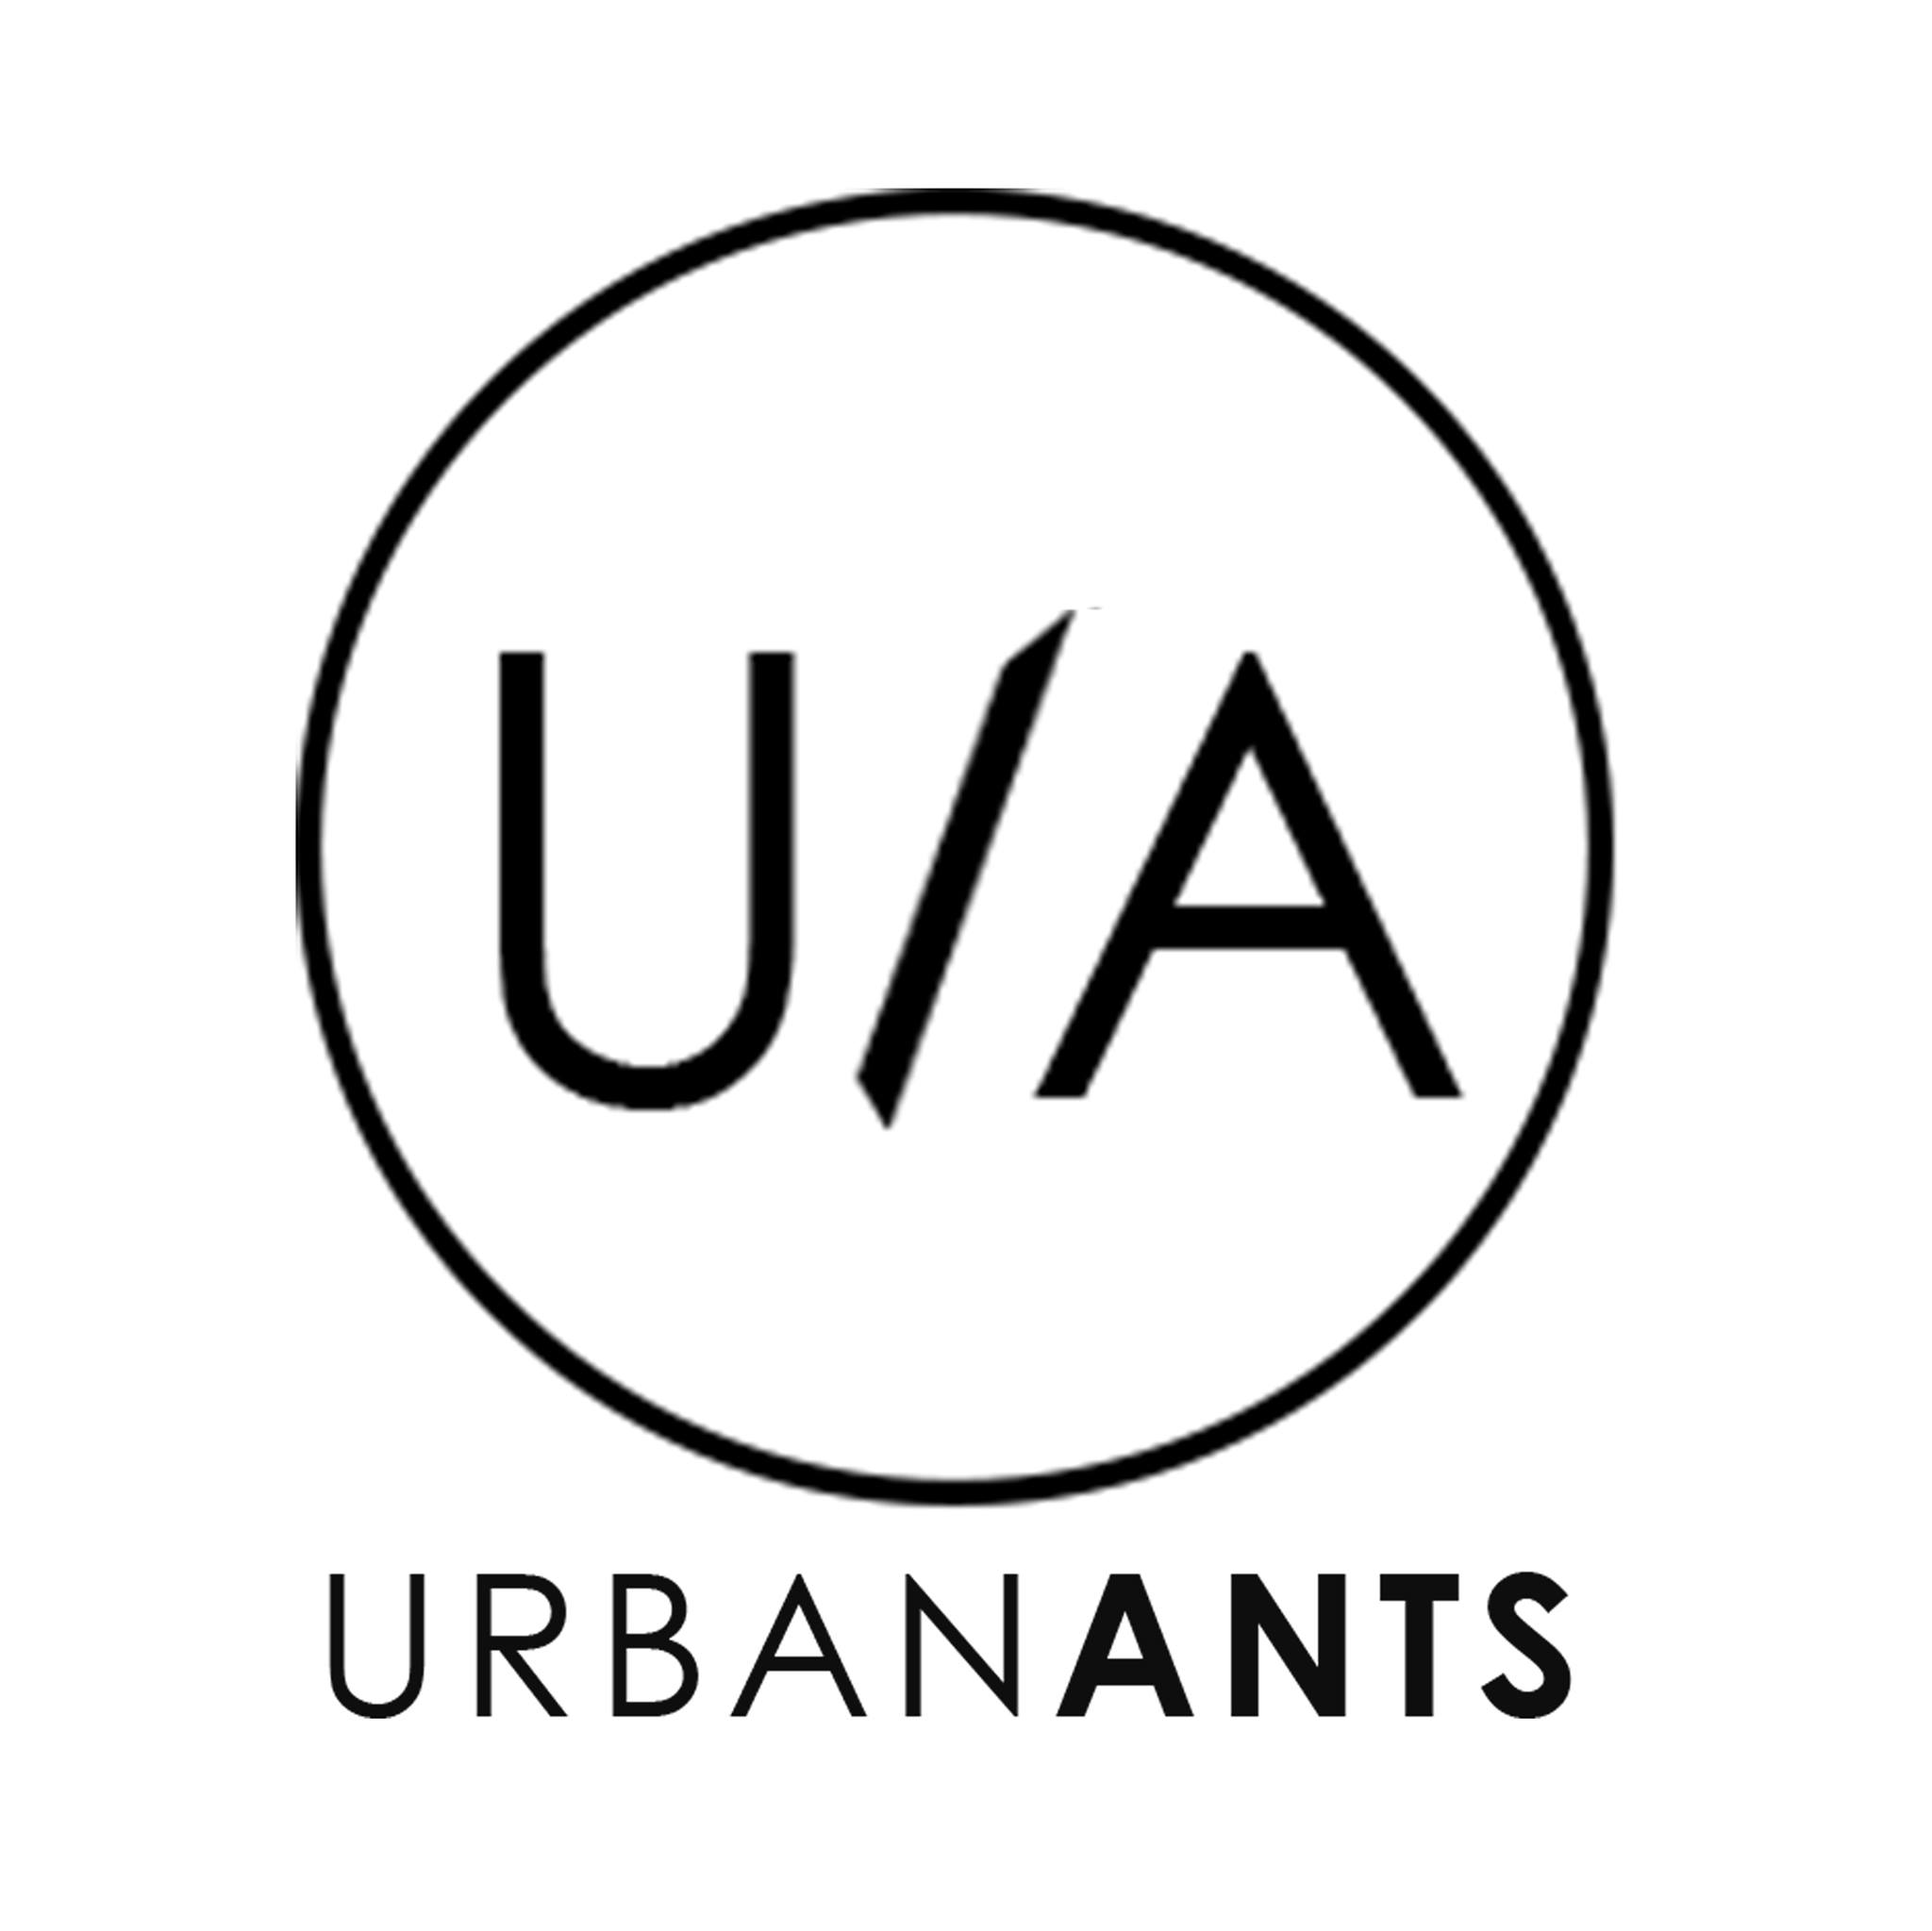 URBANANTS|Architect|Professional Services